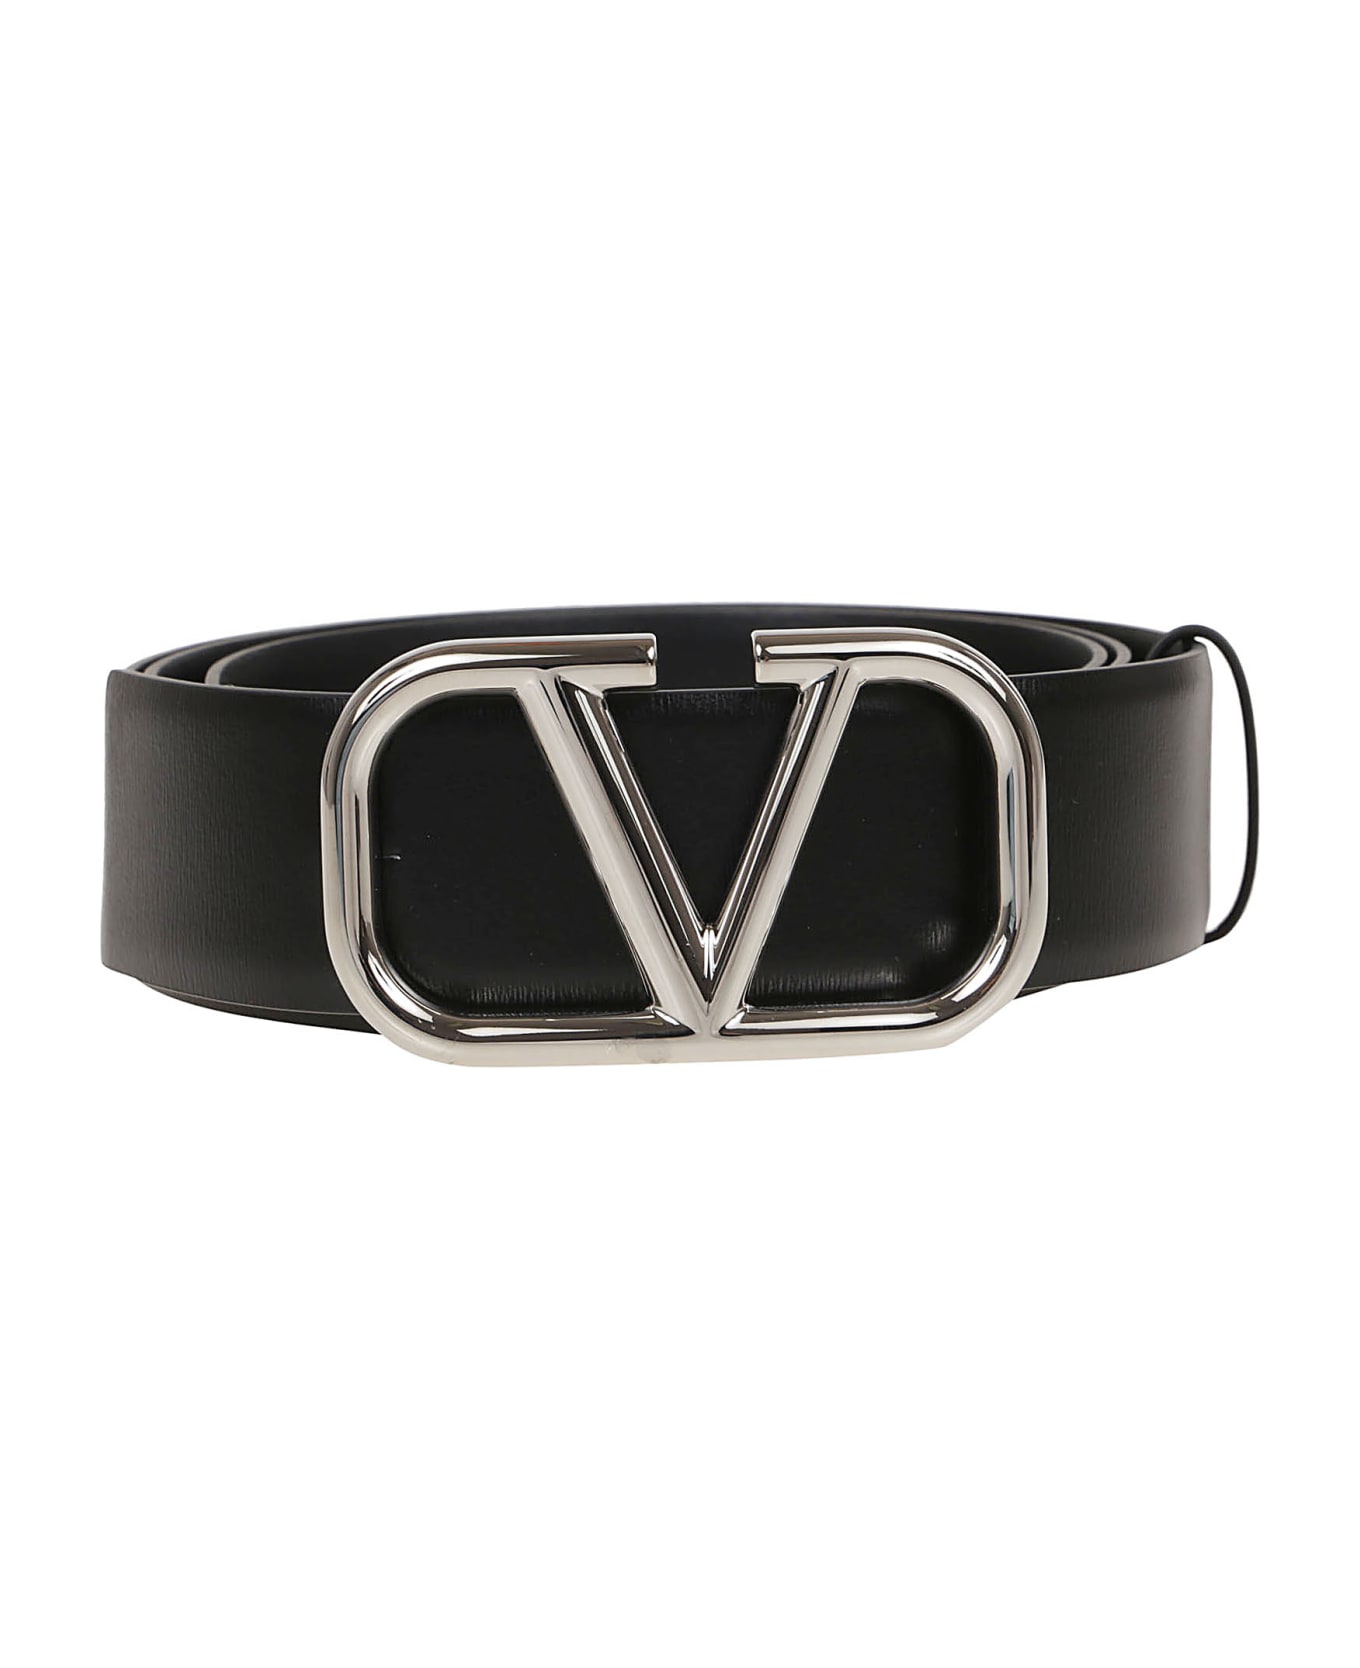 Valentino embroidered Garavani Buckle Belt H.40 - No Nero